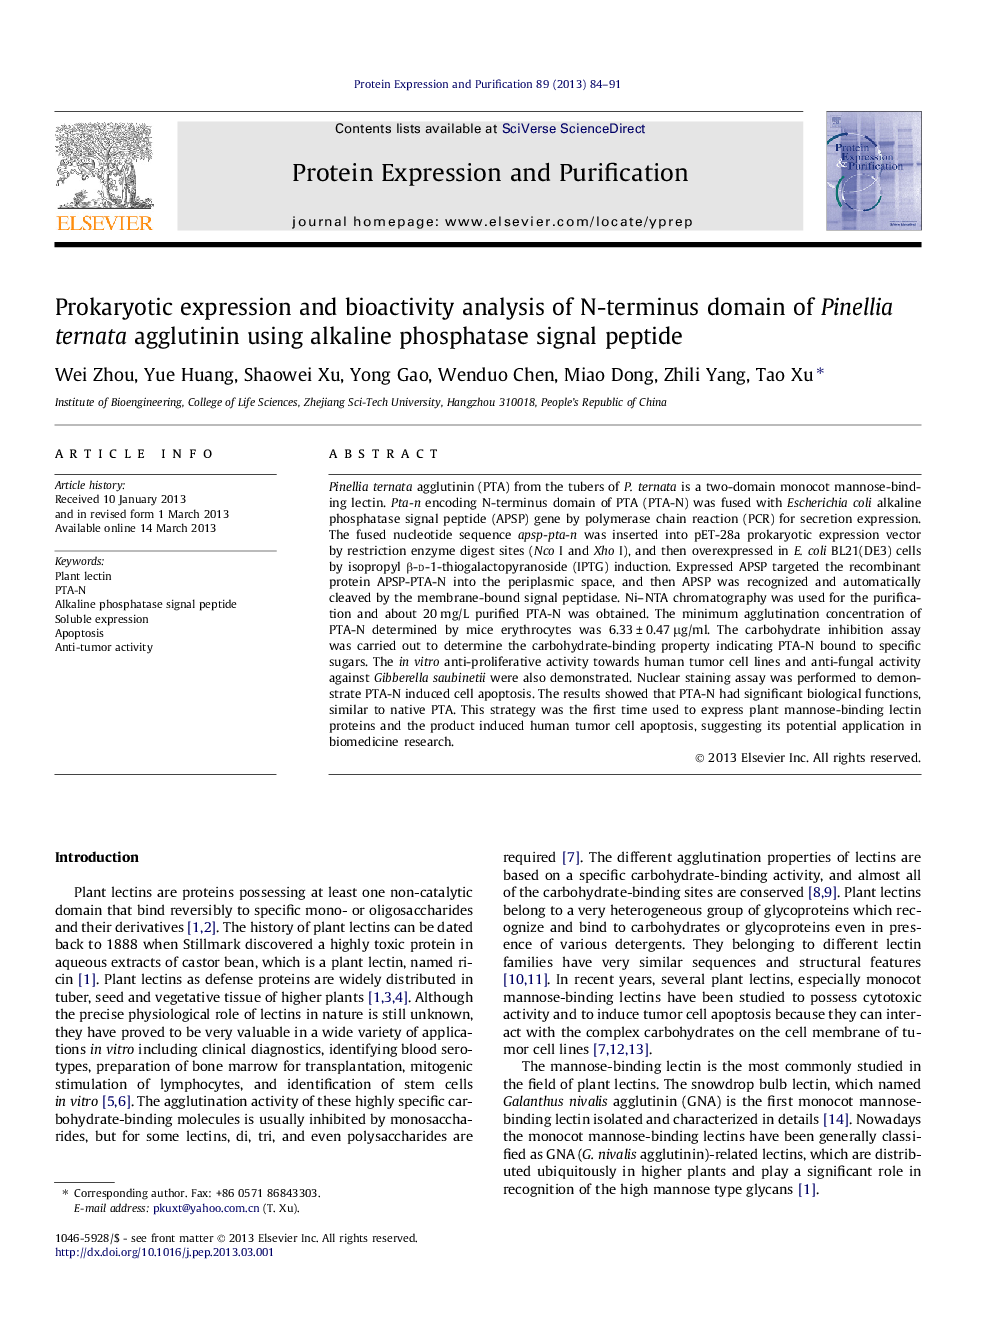 Prokaryotic expression and bioactivity analysis of N-terminus domain of Pinellia ternata agglutinin using alkaline phosphatase signal peptide